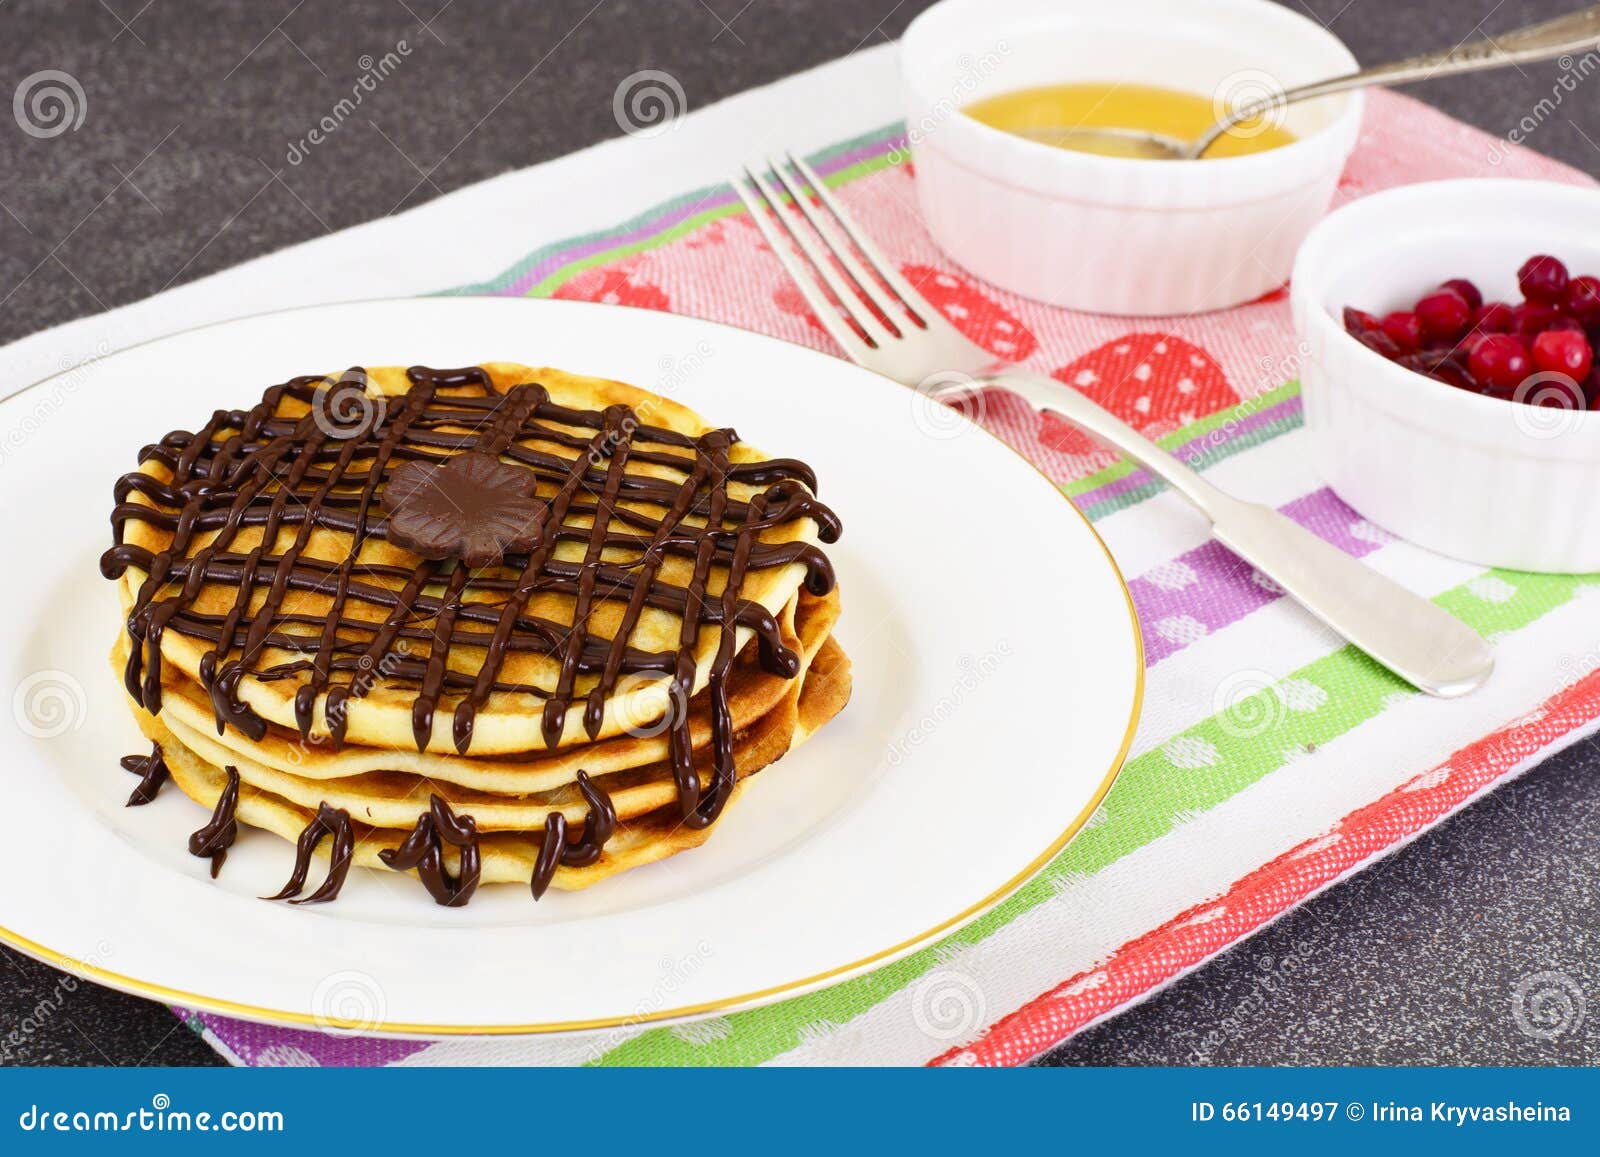 Tasty Pancakes with Chocolate Stack Stock Image - Image of cake ...